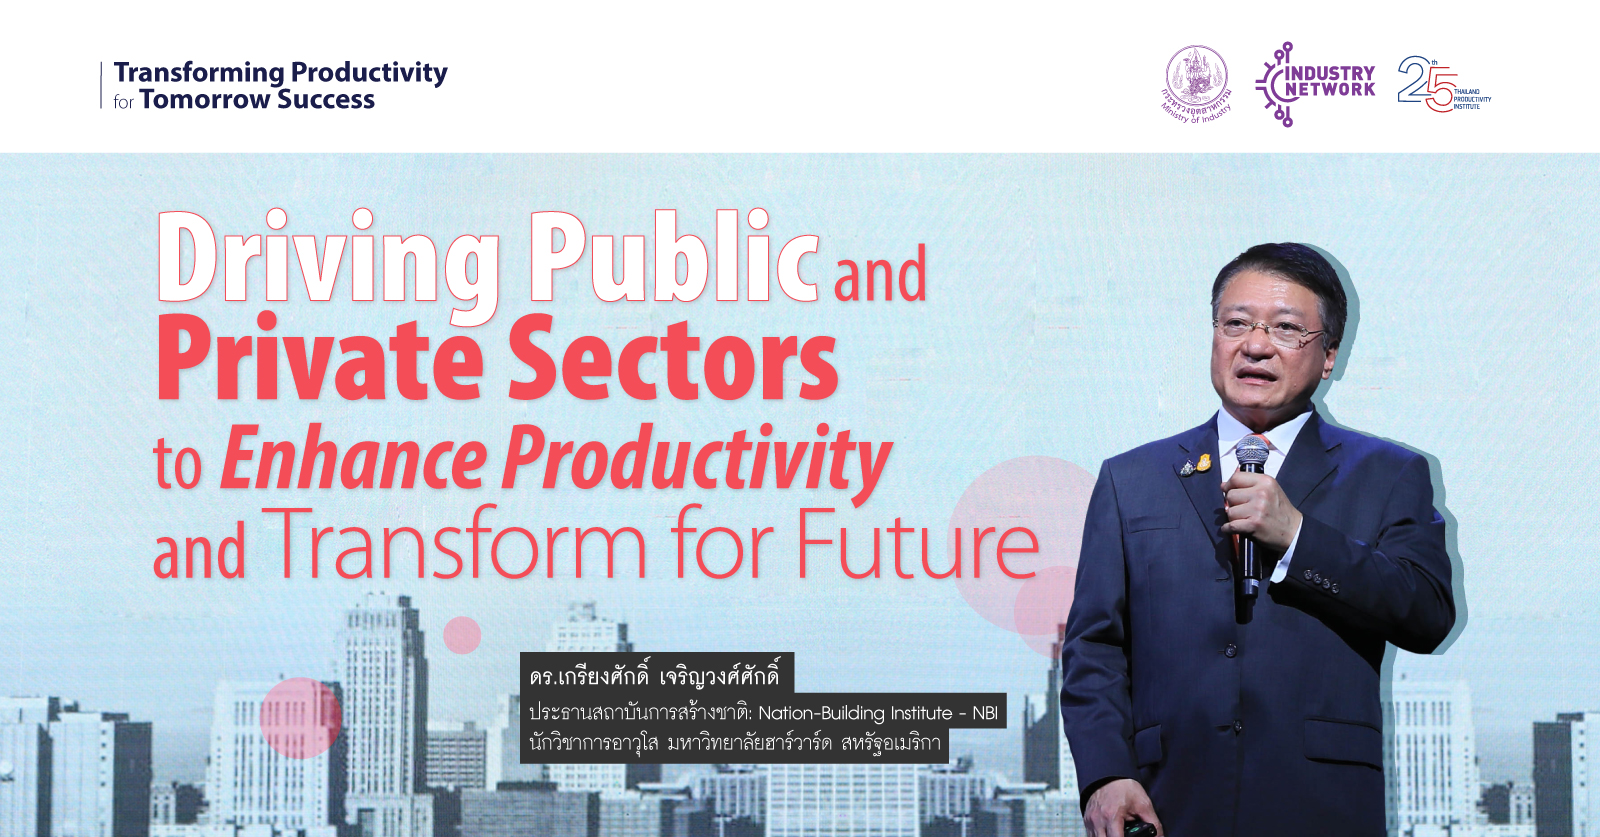 International Forum on Transforming Productivity for Tomorrow Success 